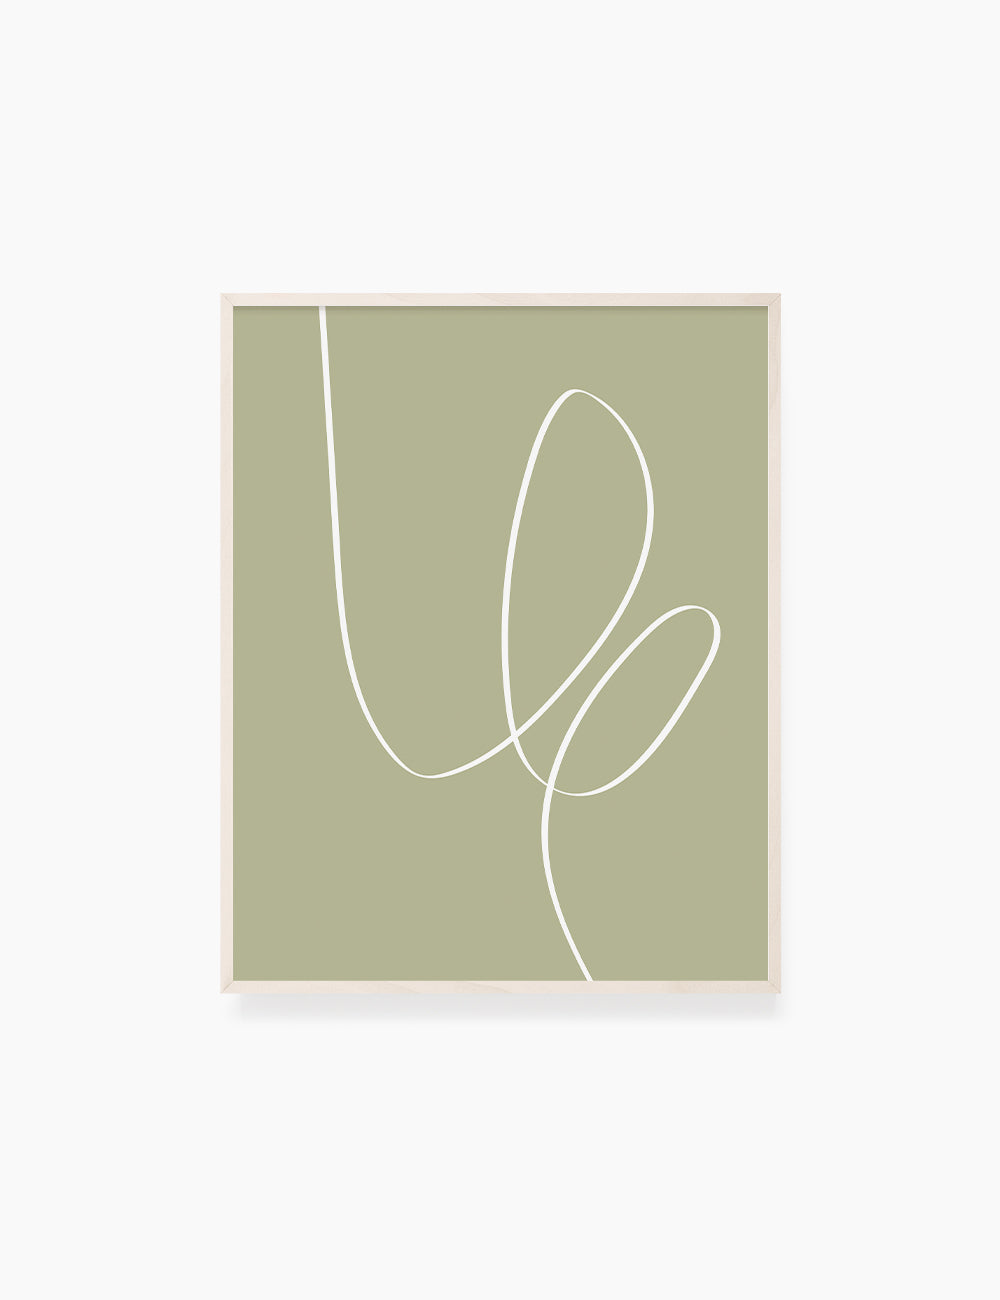 MINIMAL LINE ART. Abstract. Boho. Green. Printable Wall Art Illustration. - PAPER MOON Art & Design